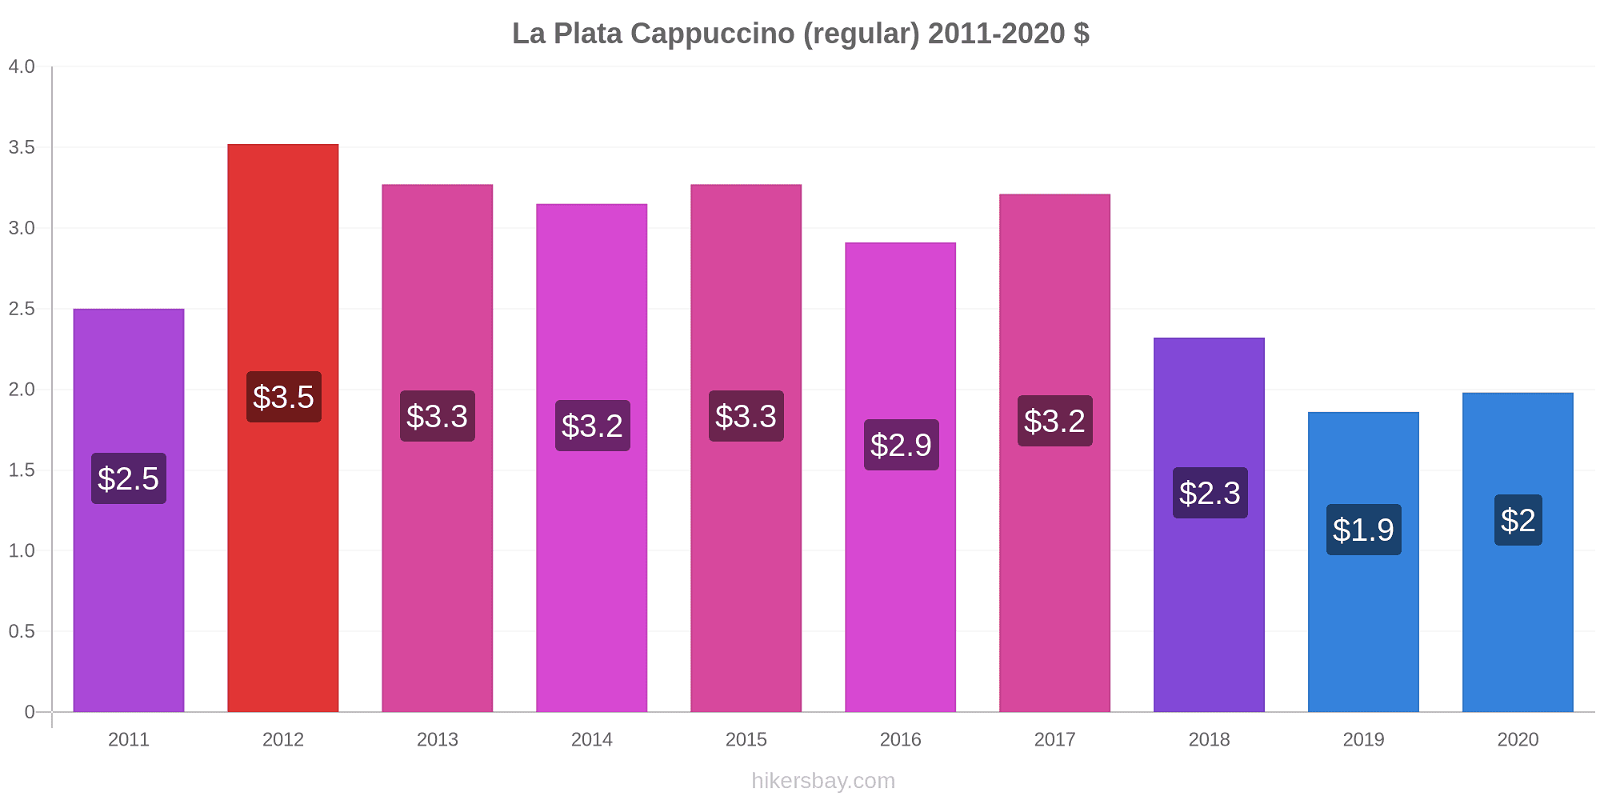 La Plata price changes Cappuccino (regular) hikersbay.com